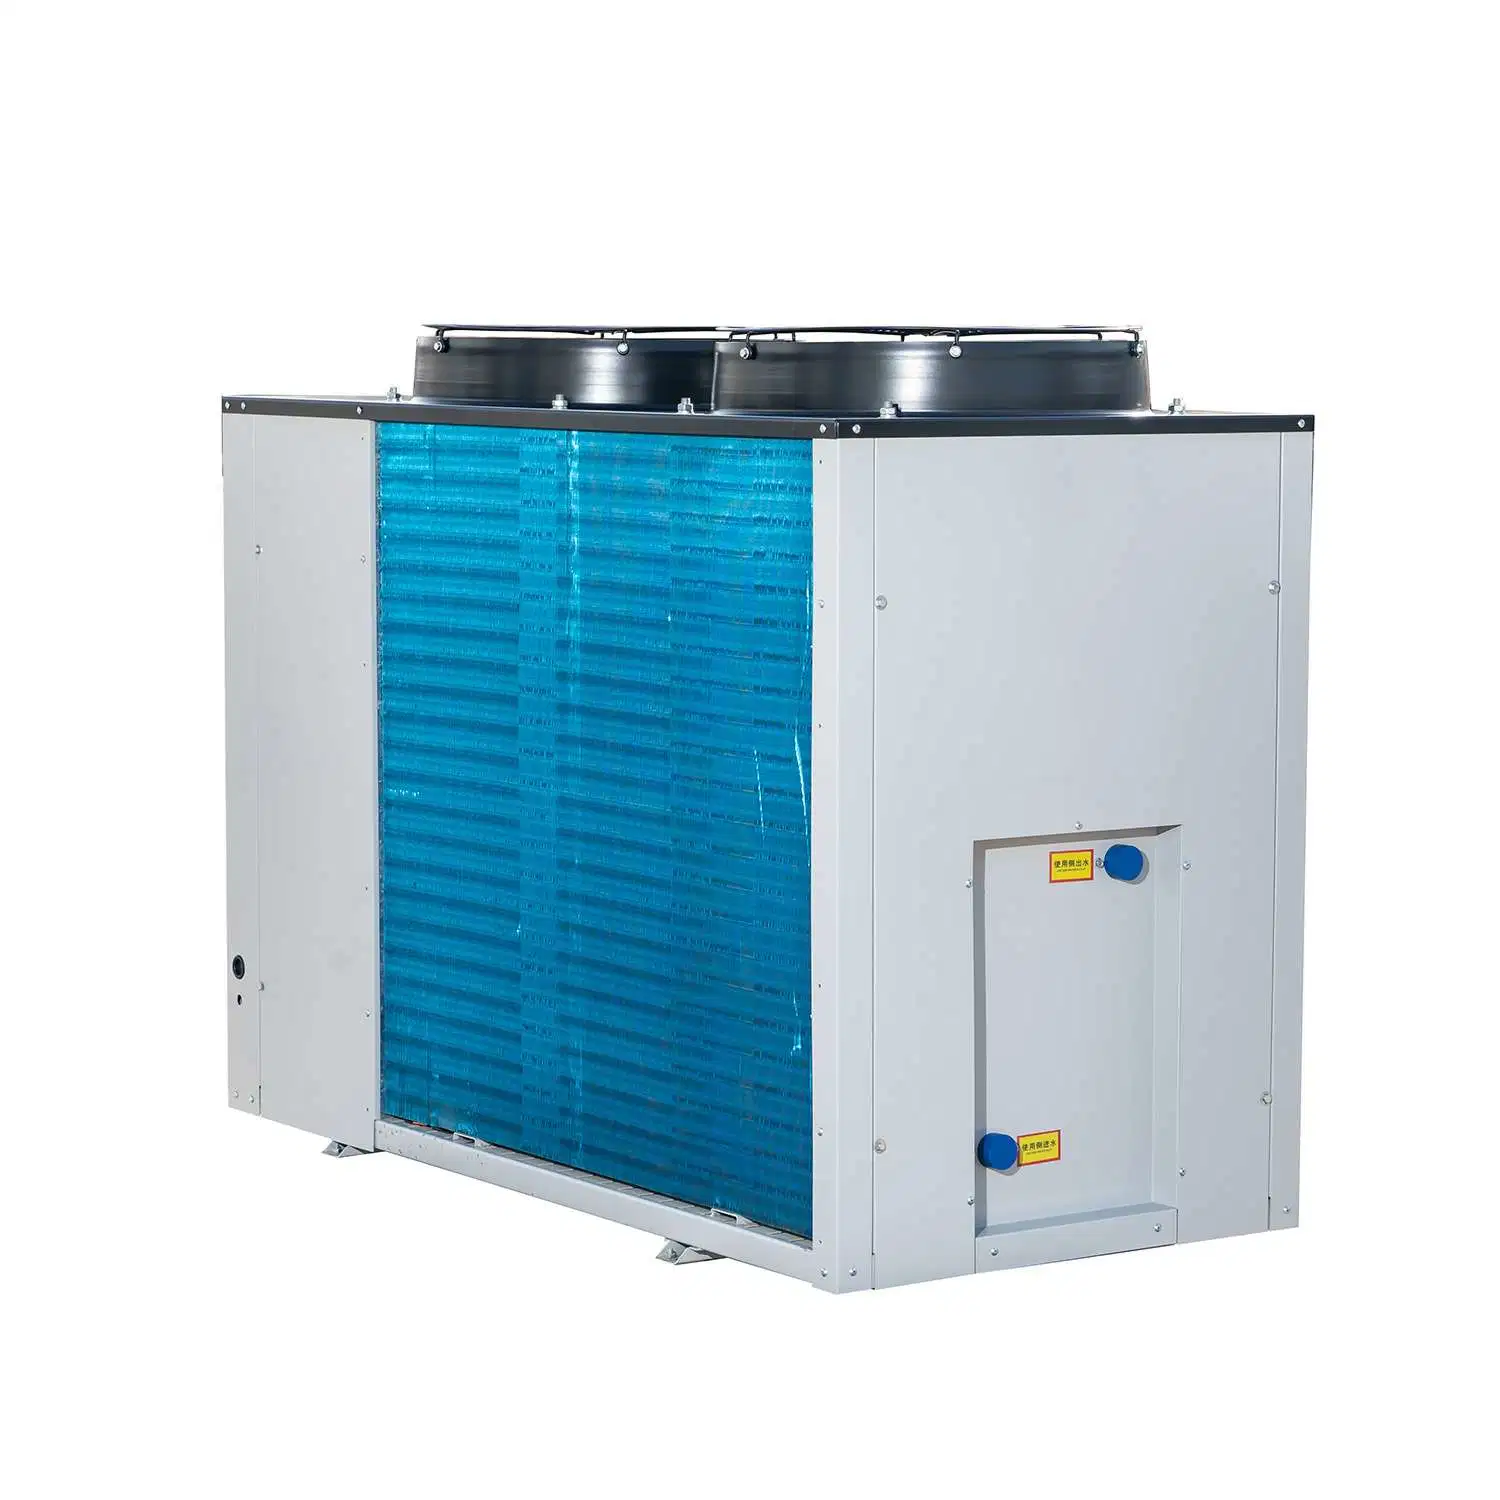 Industrielle Klimaanlage luftgekühlt Modular Scroll Kühlung-Heizung Wärmepumpe / HVAC Wasser Kühlsystem R410A